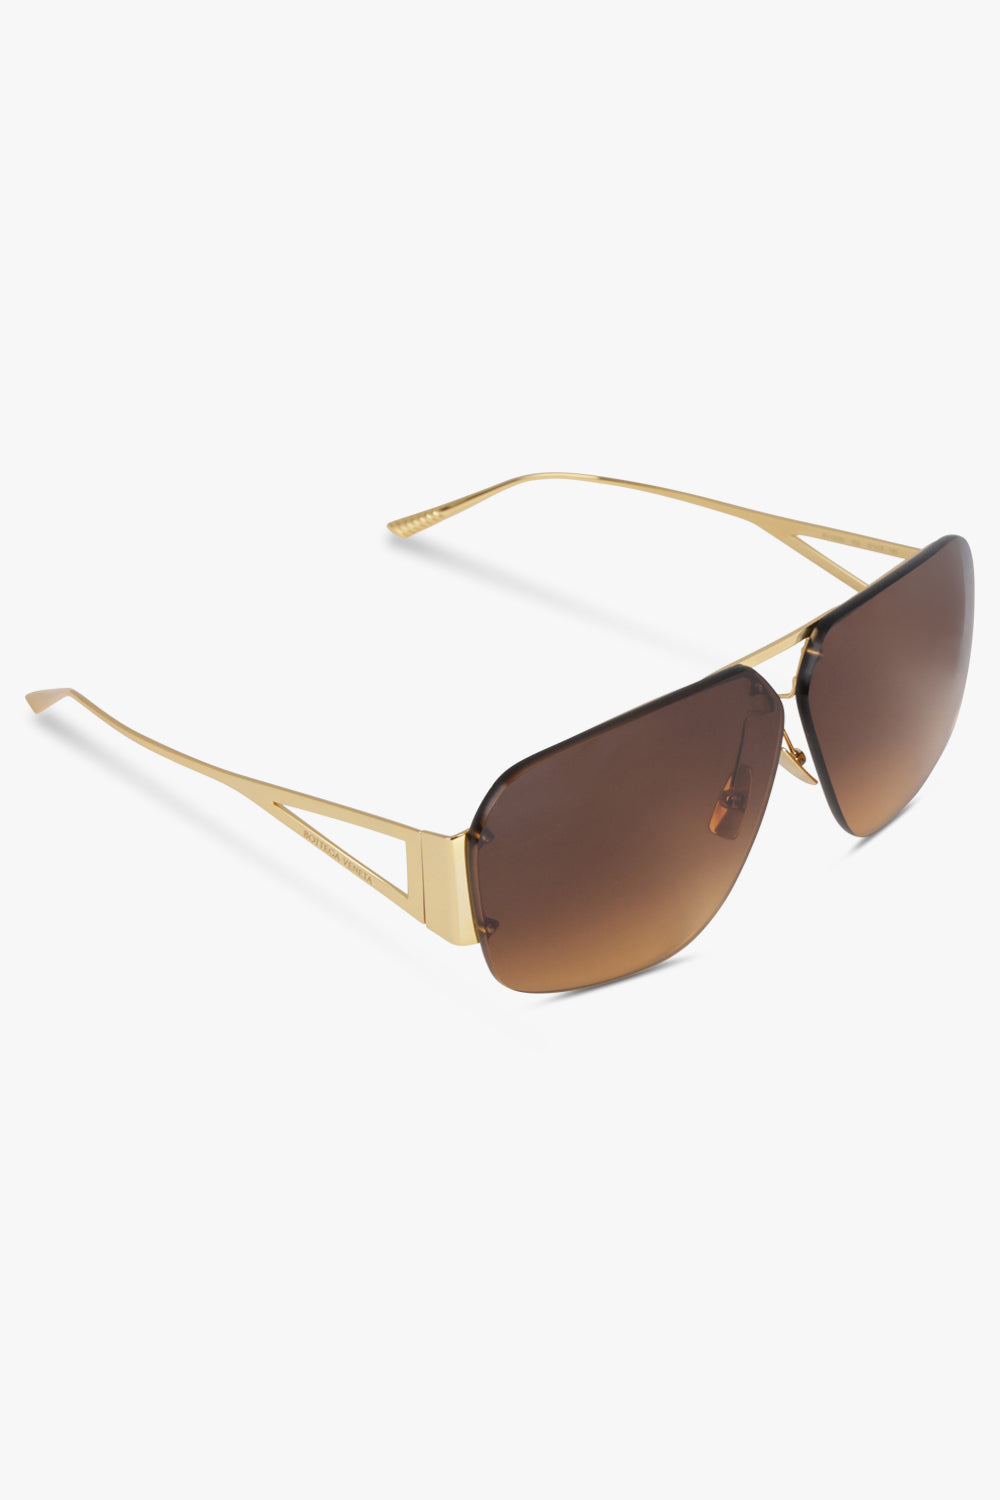 BOTTEGA VENETA ACCESSORIES BROWN / GOLD/BROWN Classic Aviator Sunglasses | Gold/Brown